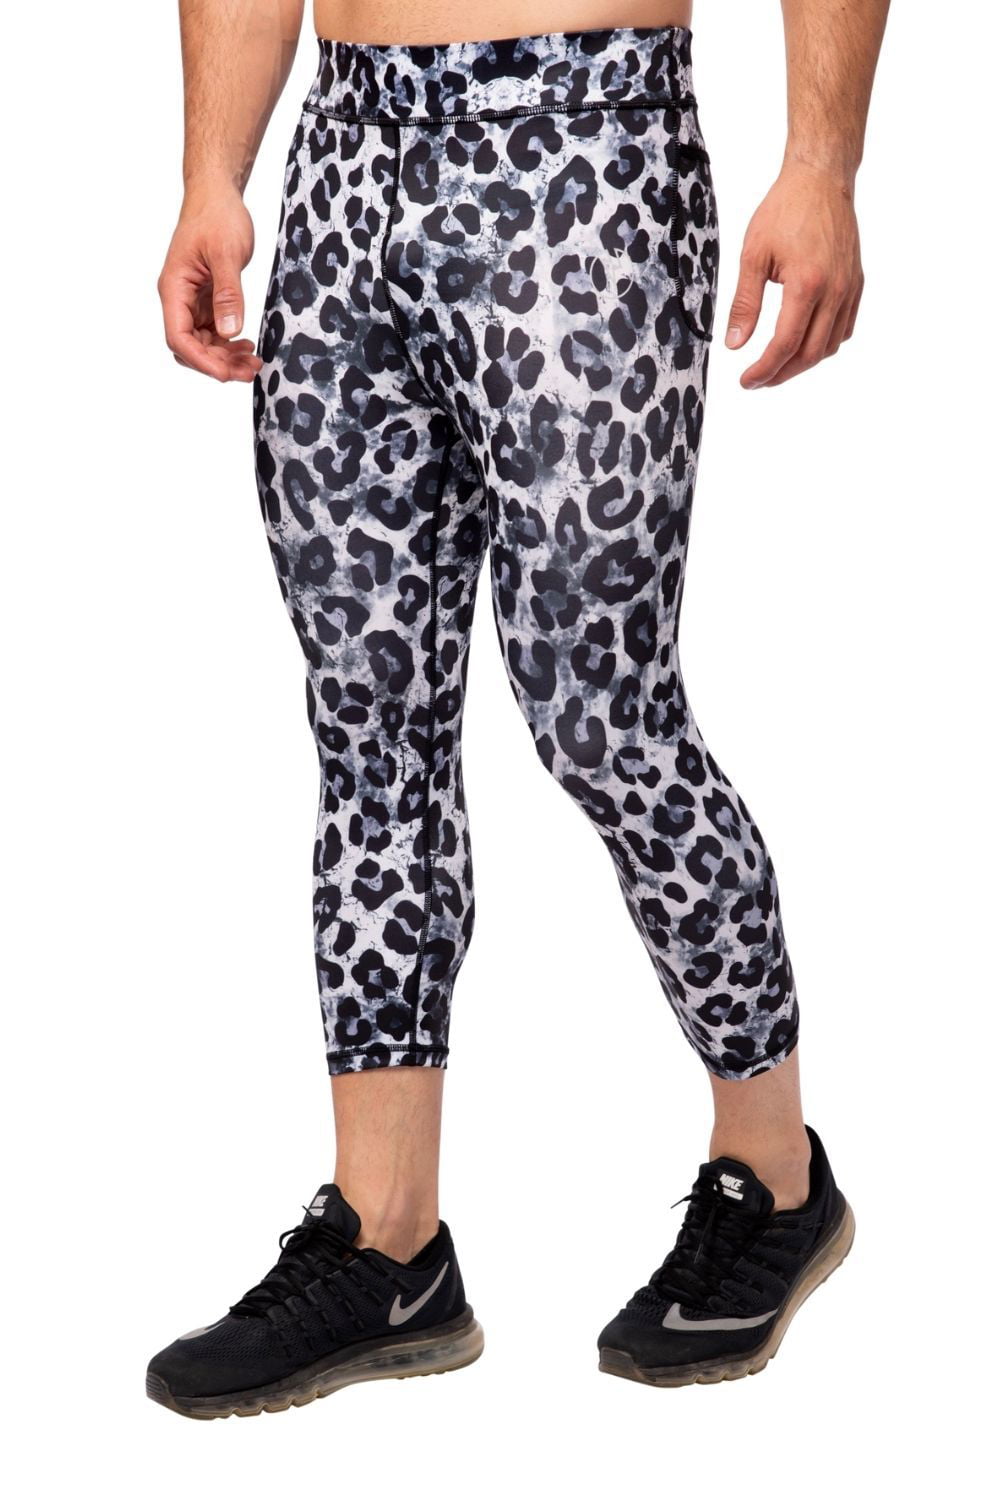 barrière automaat beweeglijkheid Men's 3/4 Length Leggings, Compression Activewear with Pockets - Snow  Leopard, X-Large - Walmart.com